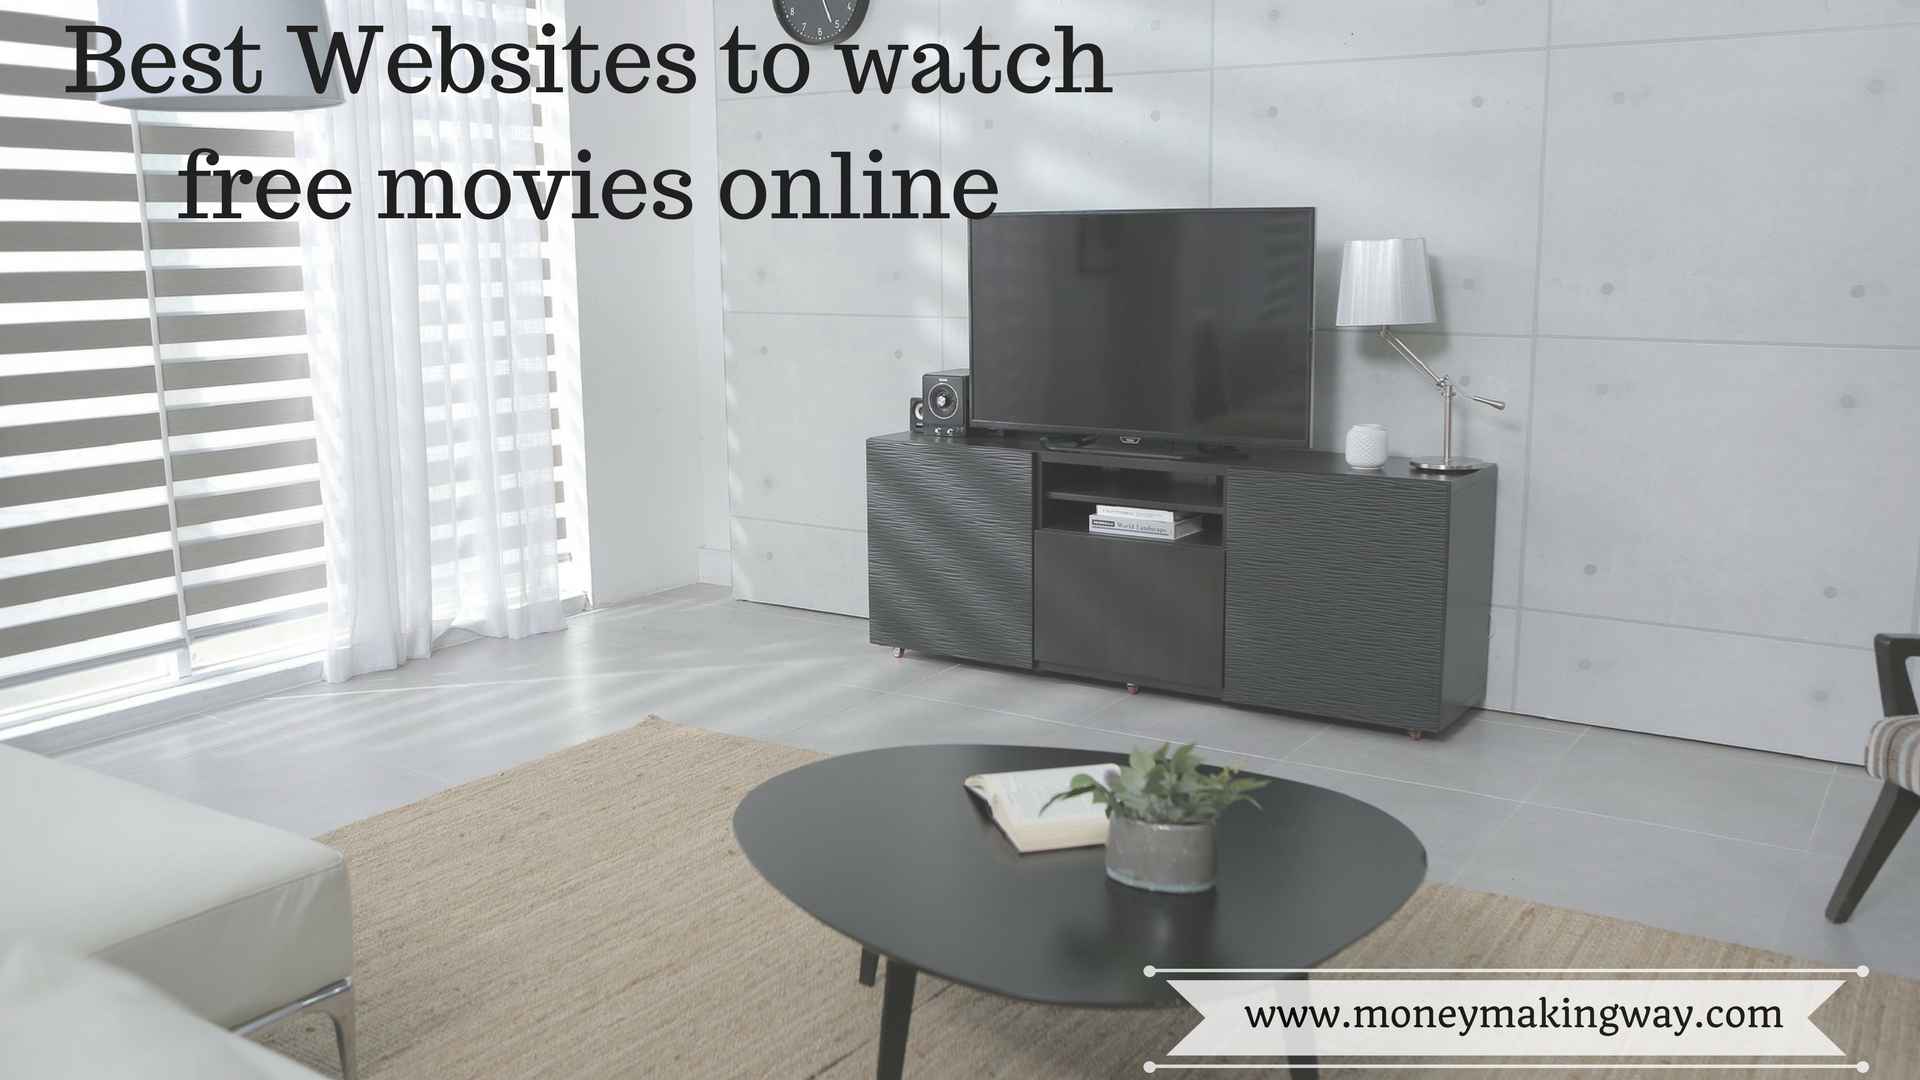 Free movies online